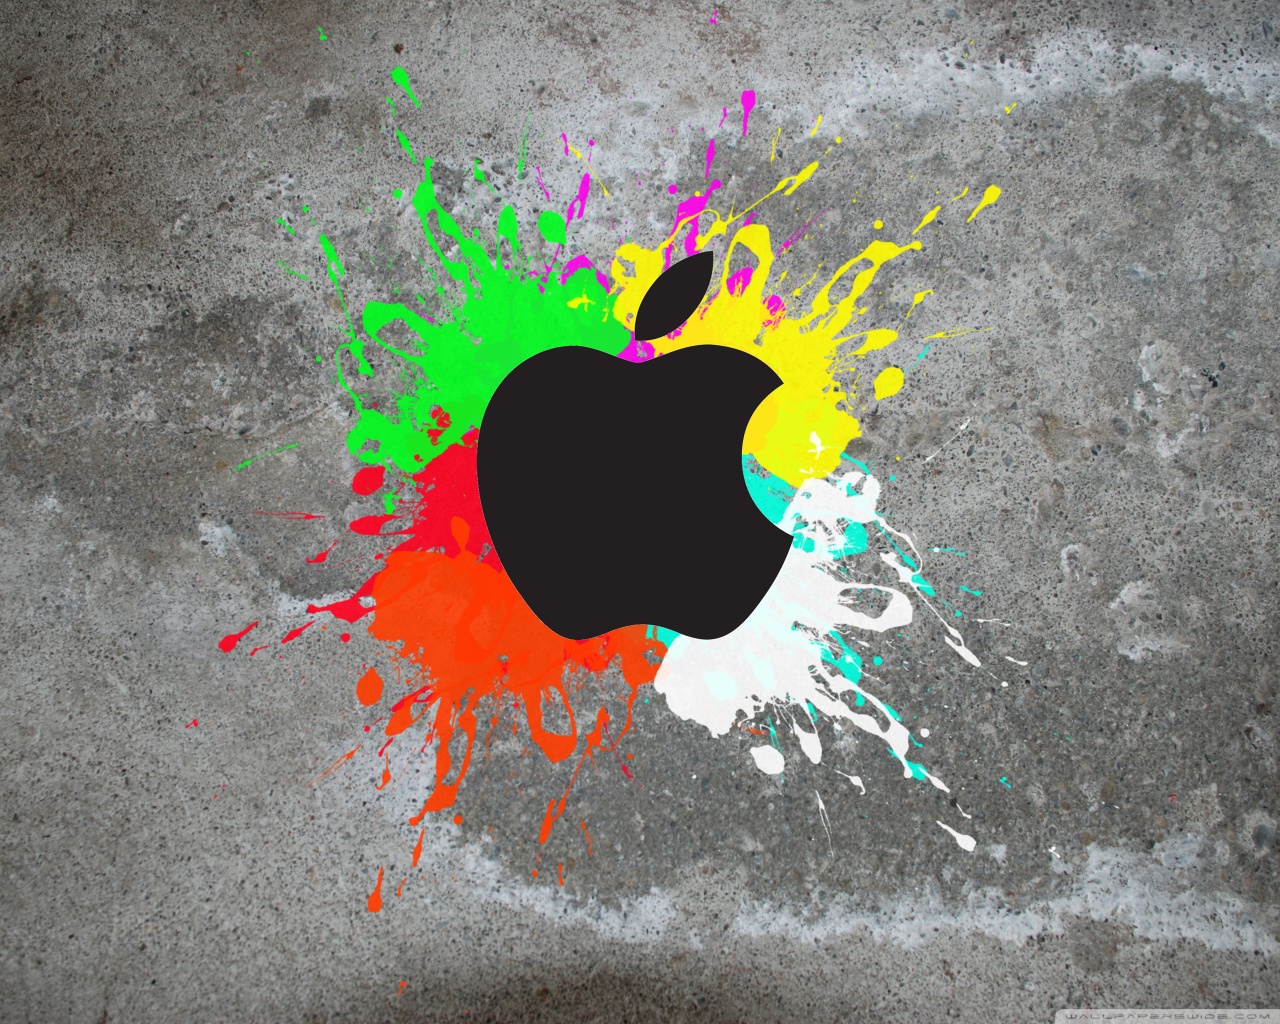 apple images wallpaper,graphic design,colorfulness,visual arts,art,graphics